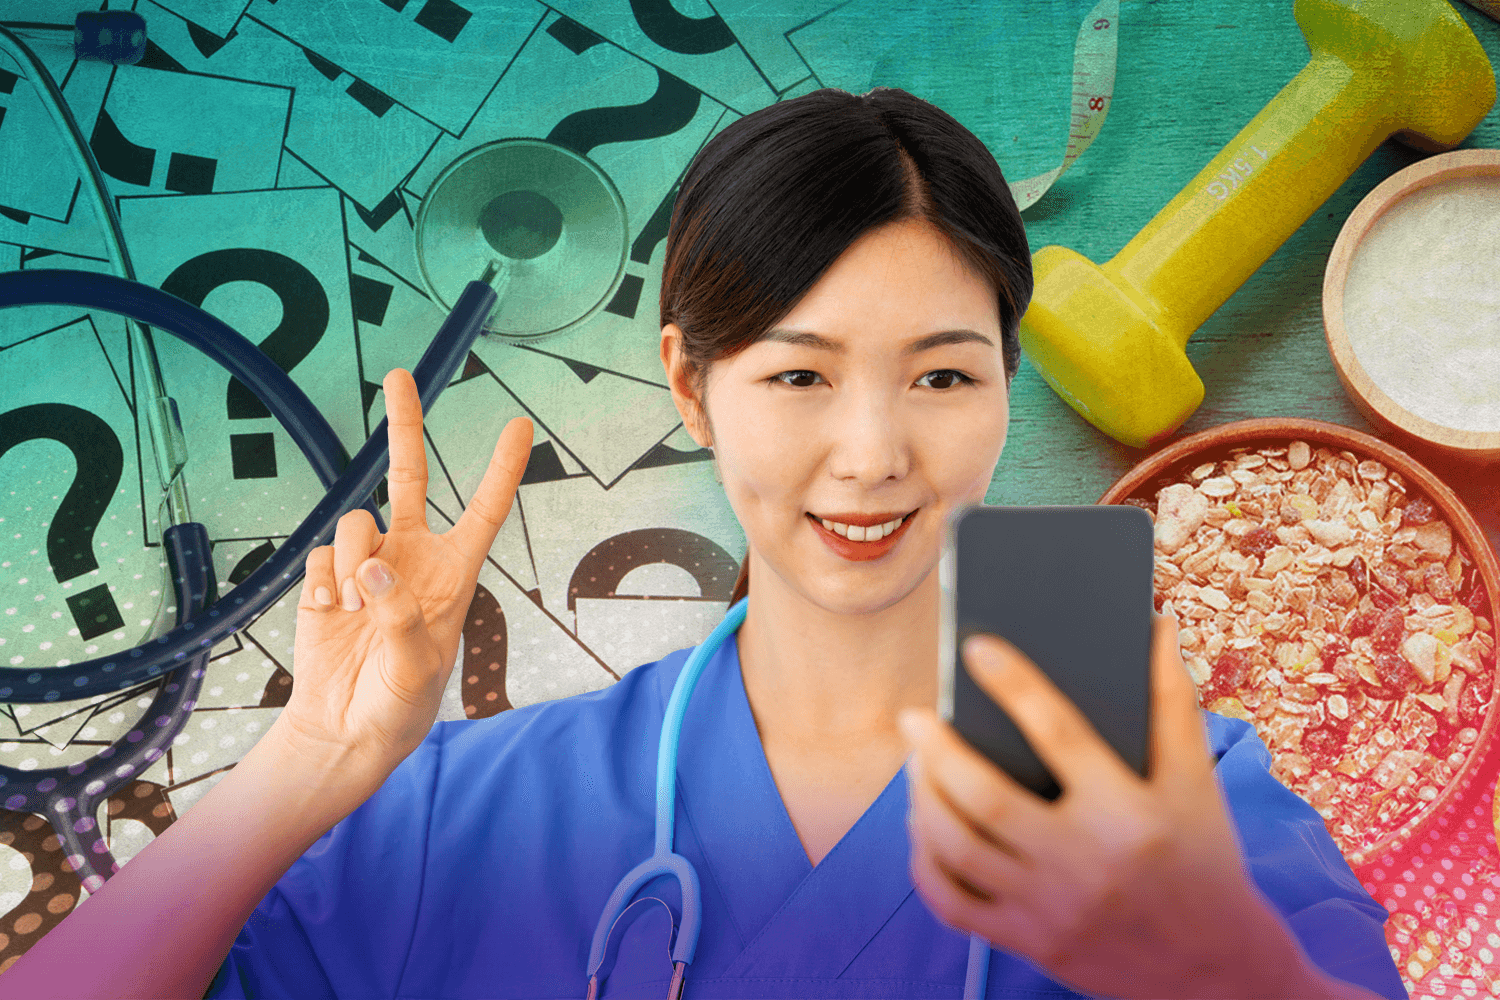 five content ideas for your next #HealthTok video